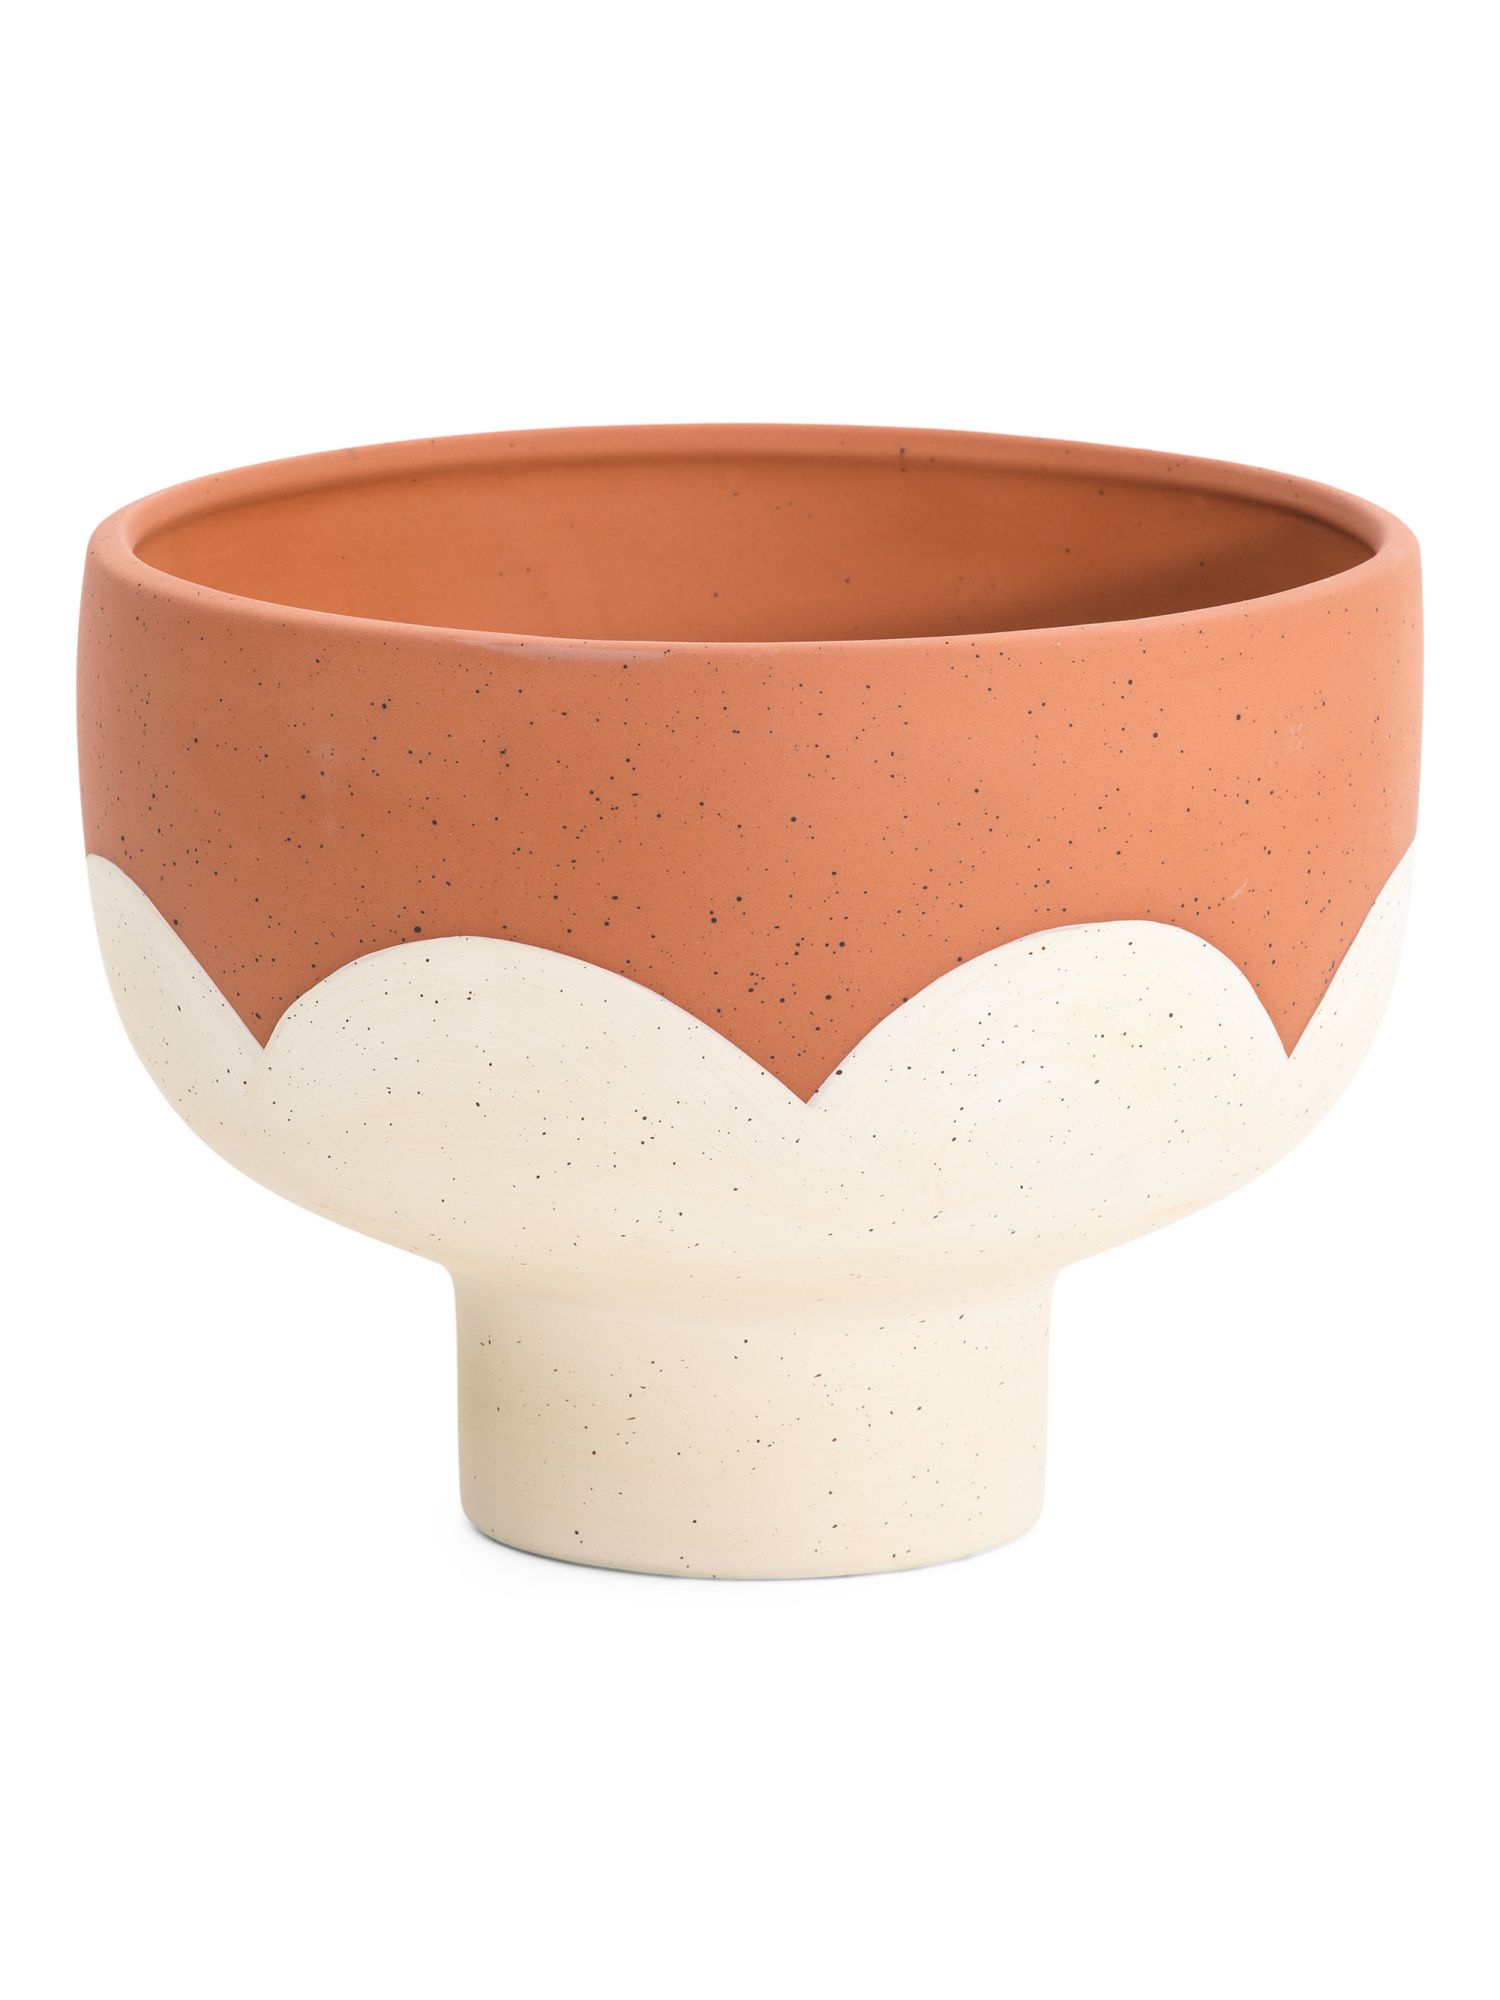 Two Tone Footed Decorative  Bowl | TJ Maxx